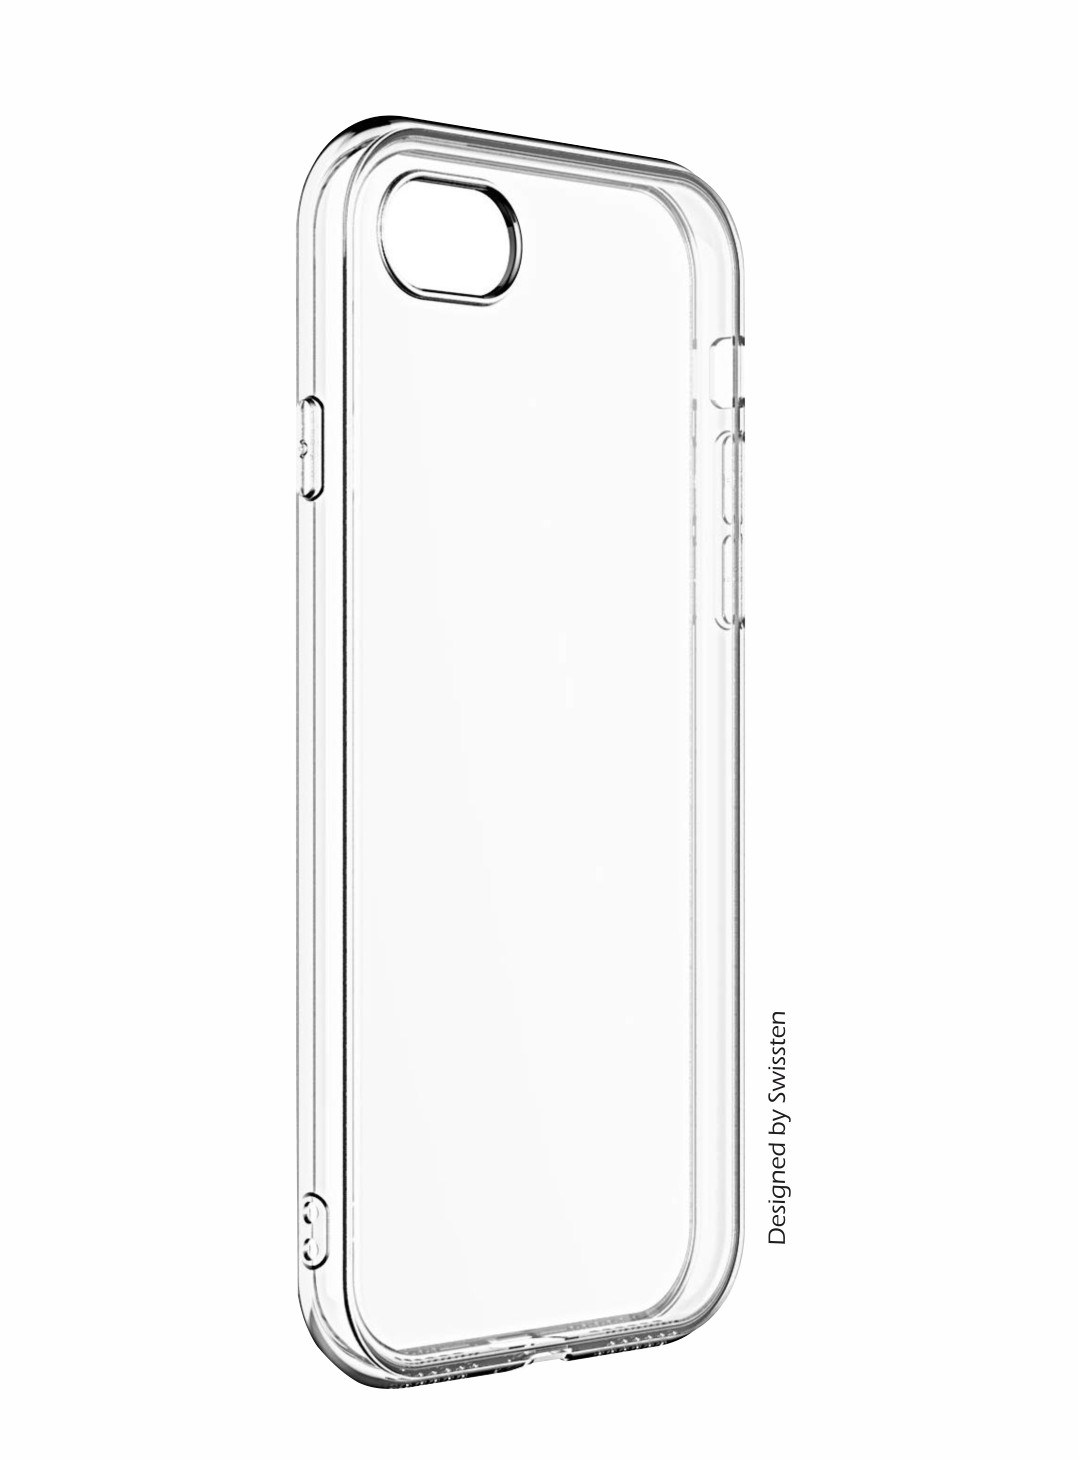 Swissten Clear Jelly Apple iPhone XS Max transparent thumb